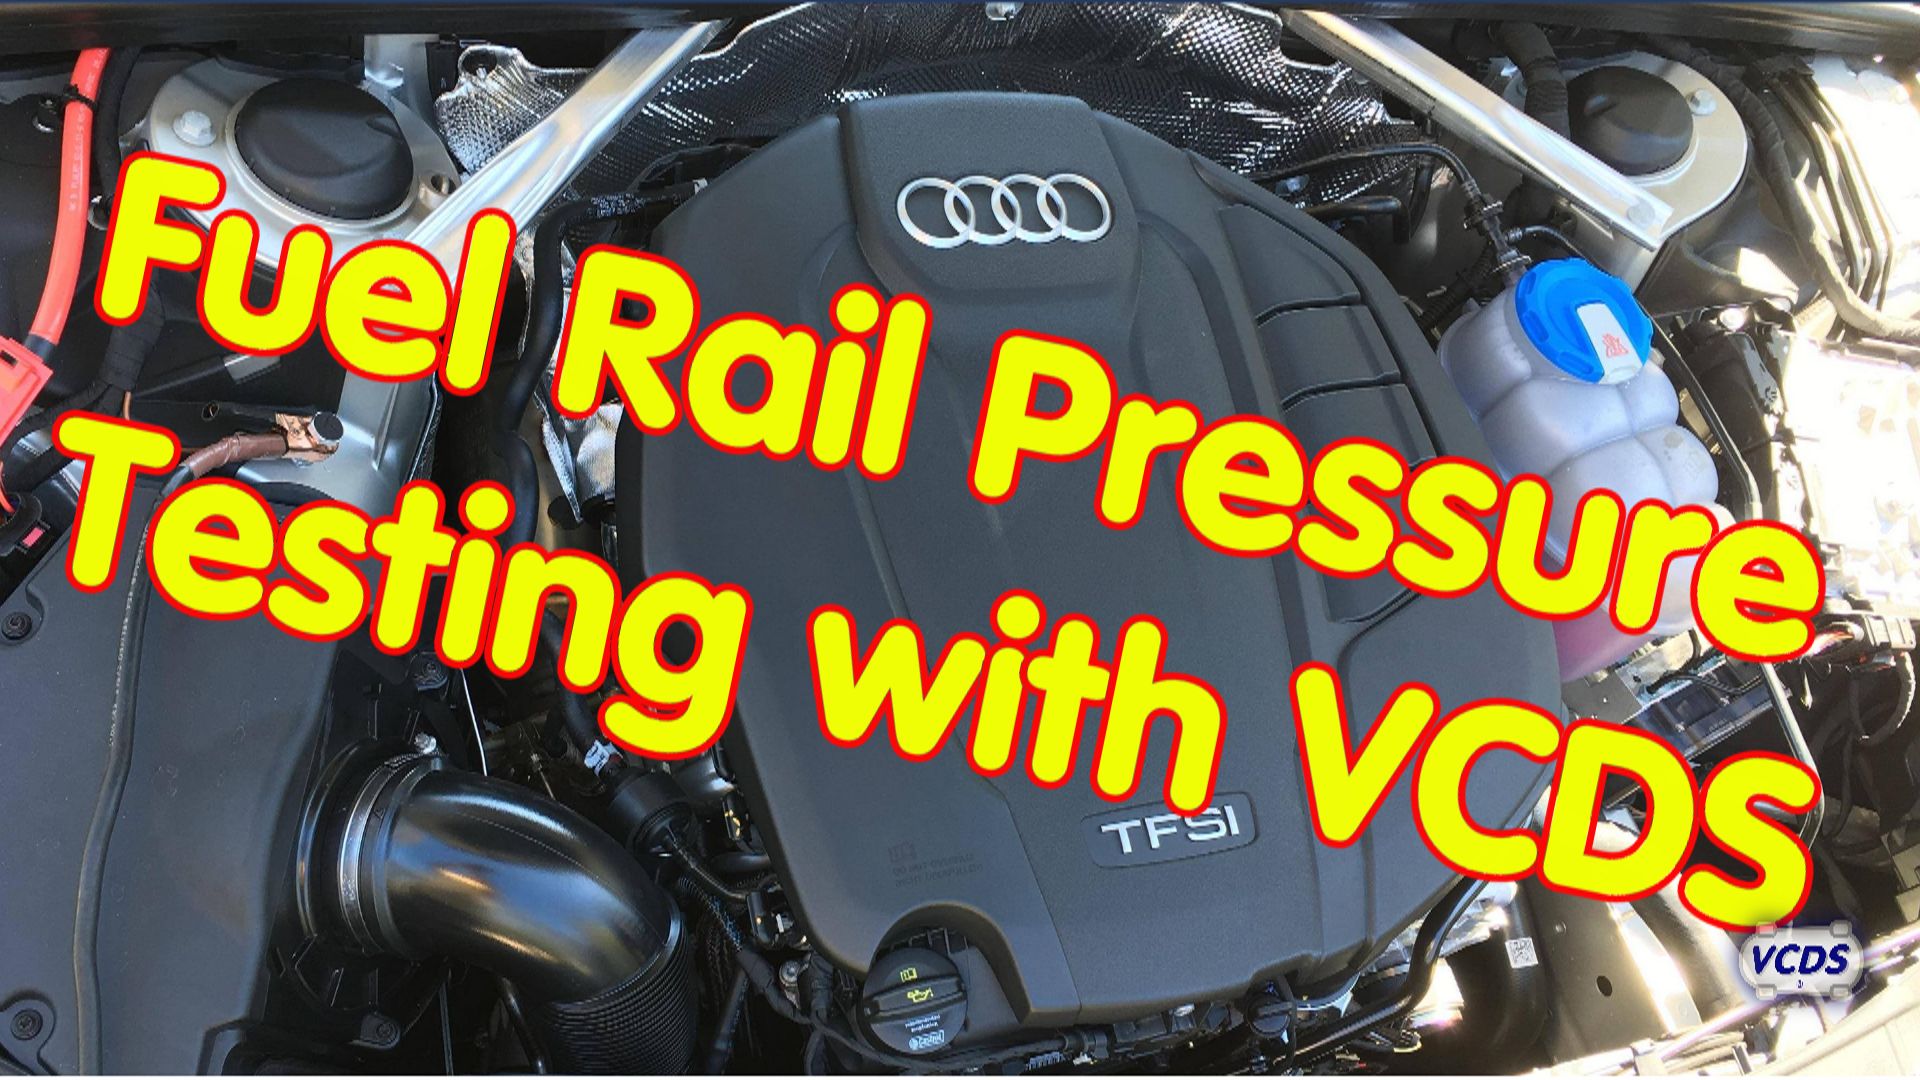 Title fuel rail pressure.jpg